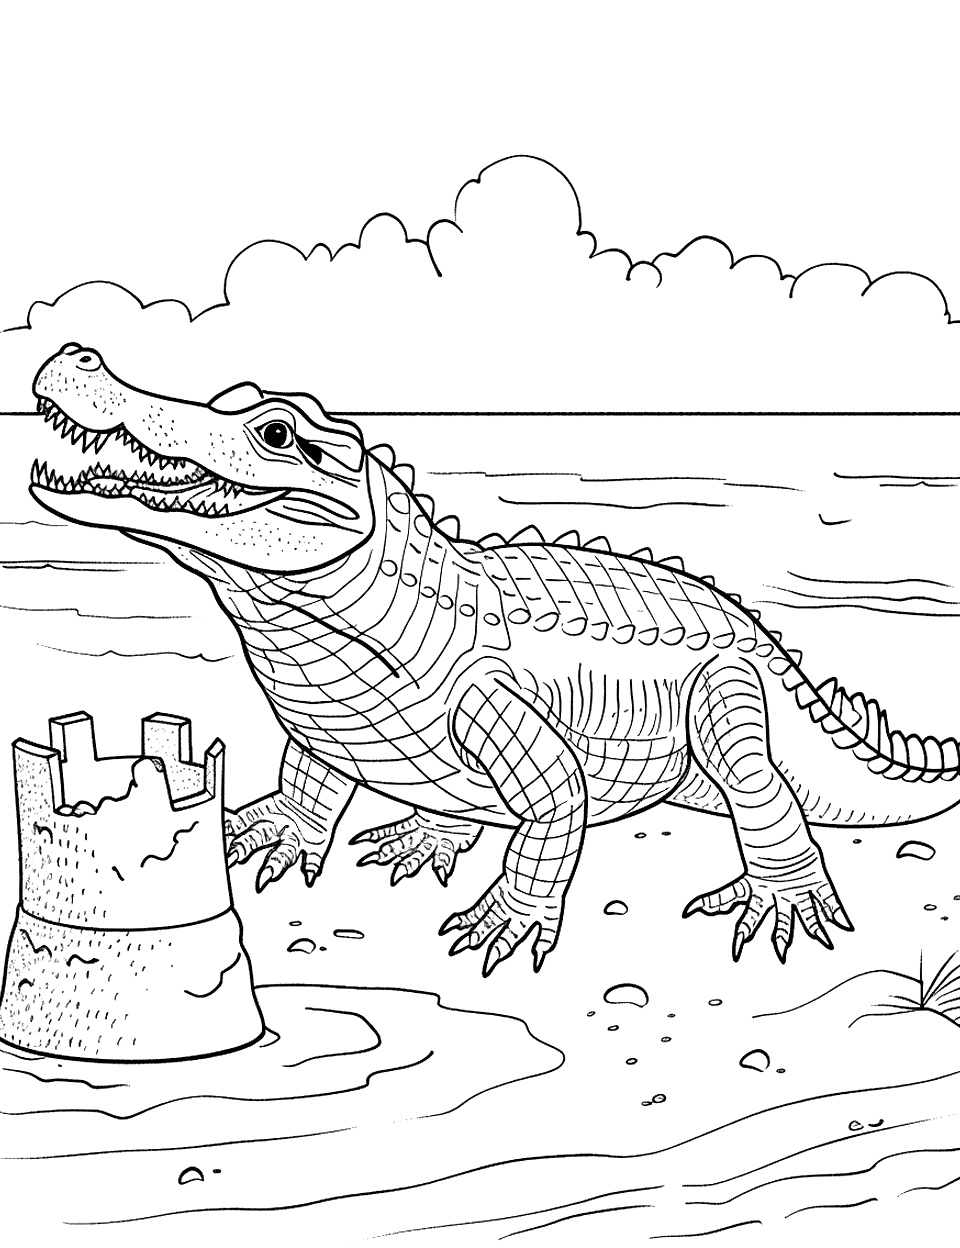 Crocodile Making Sandcastles Coloring Page - A crocodile on a sea beach busy building a big sandcastle.